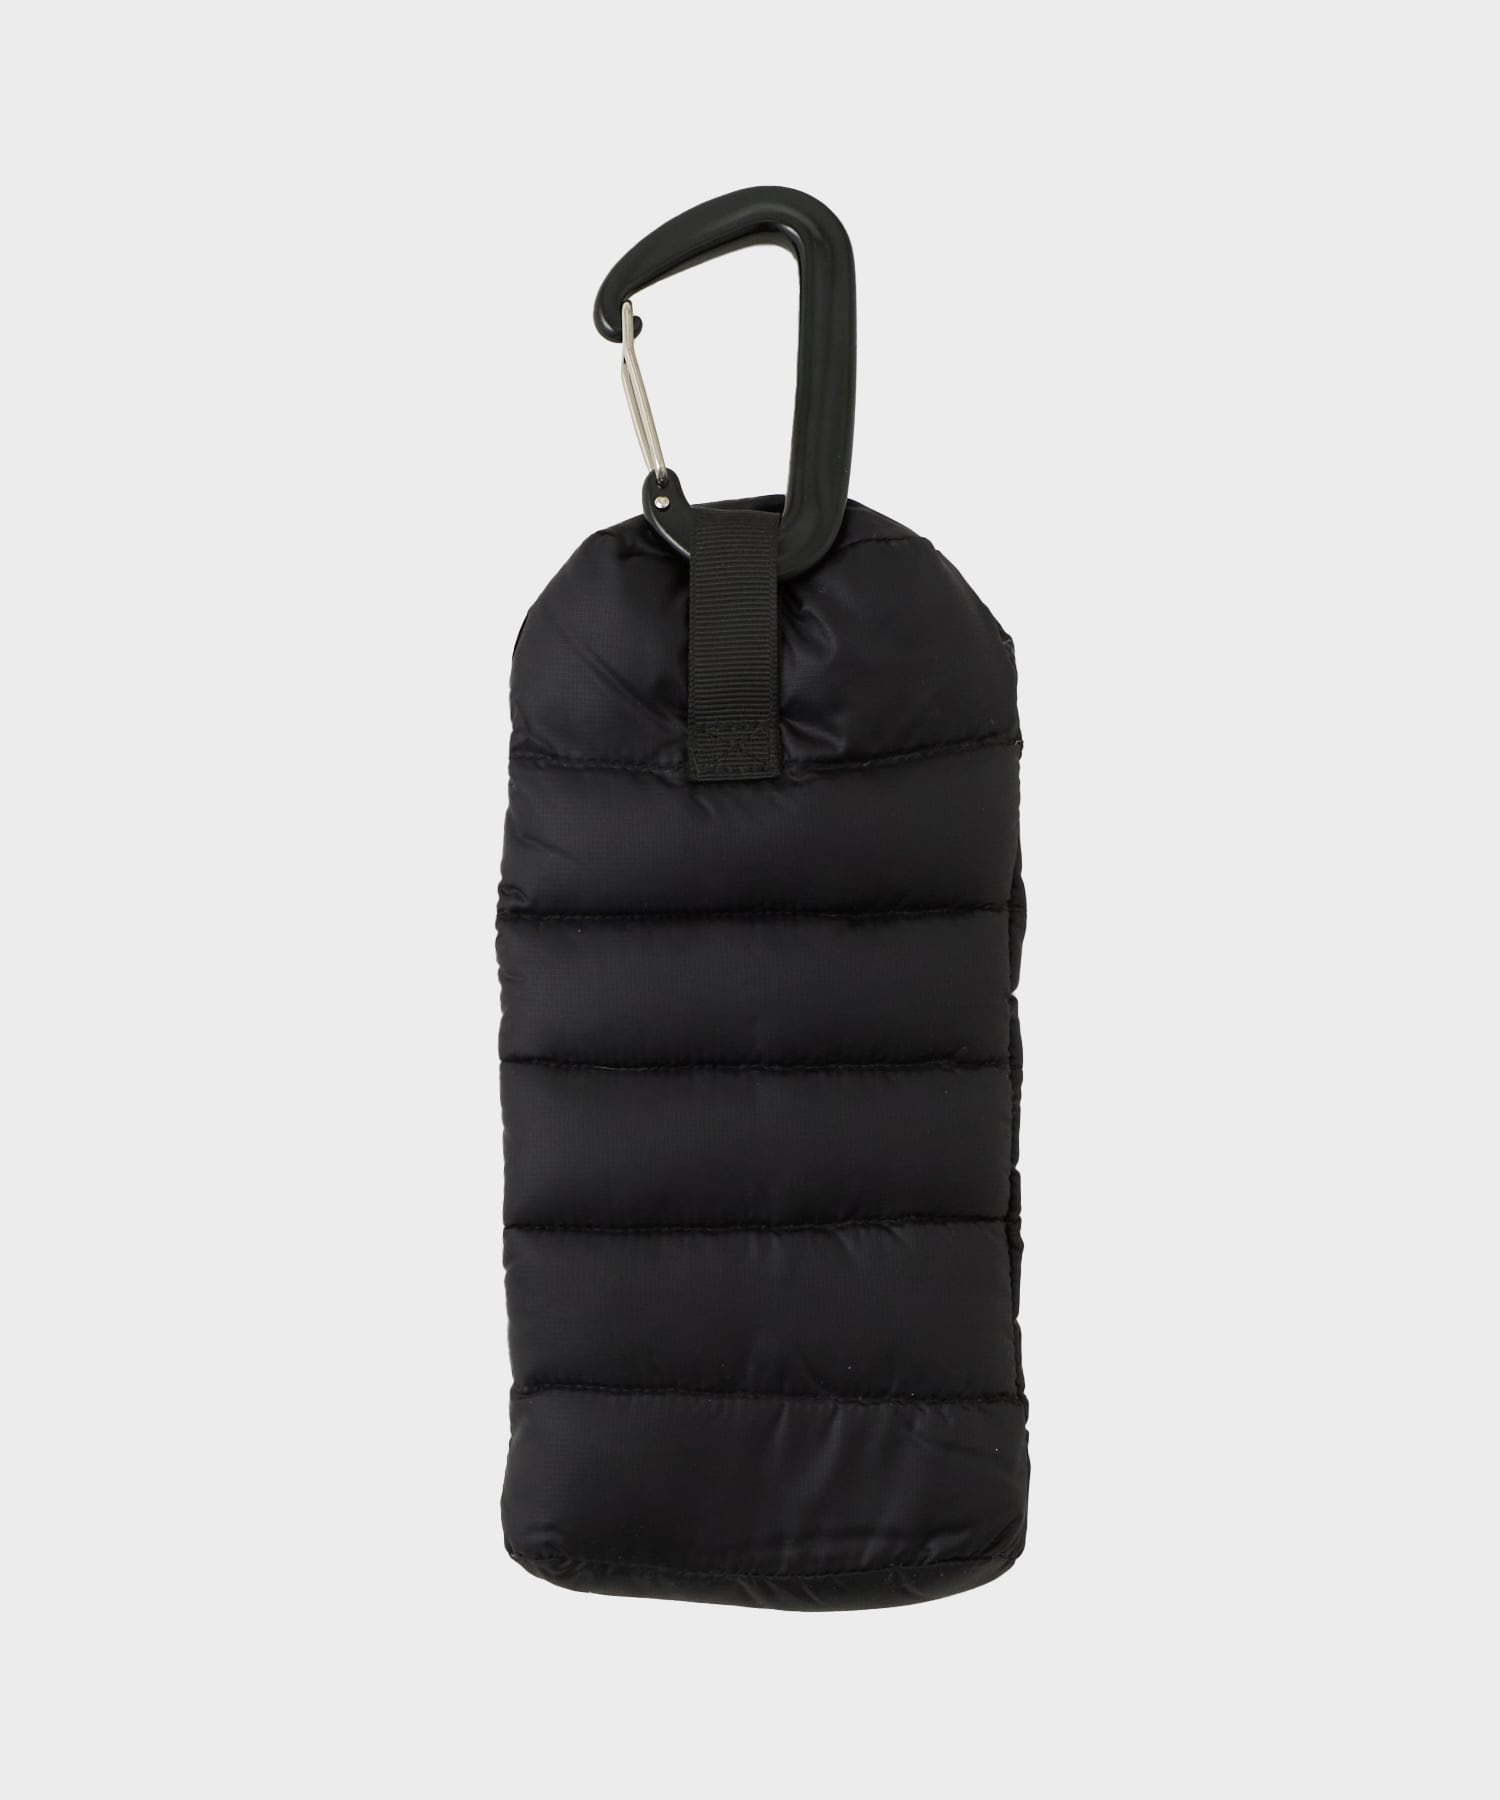 Mini sleeping bag phone case NANGA